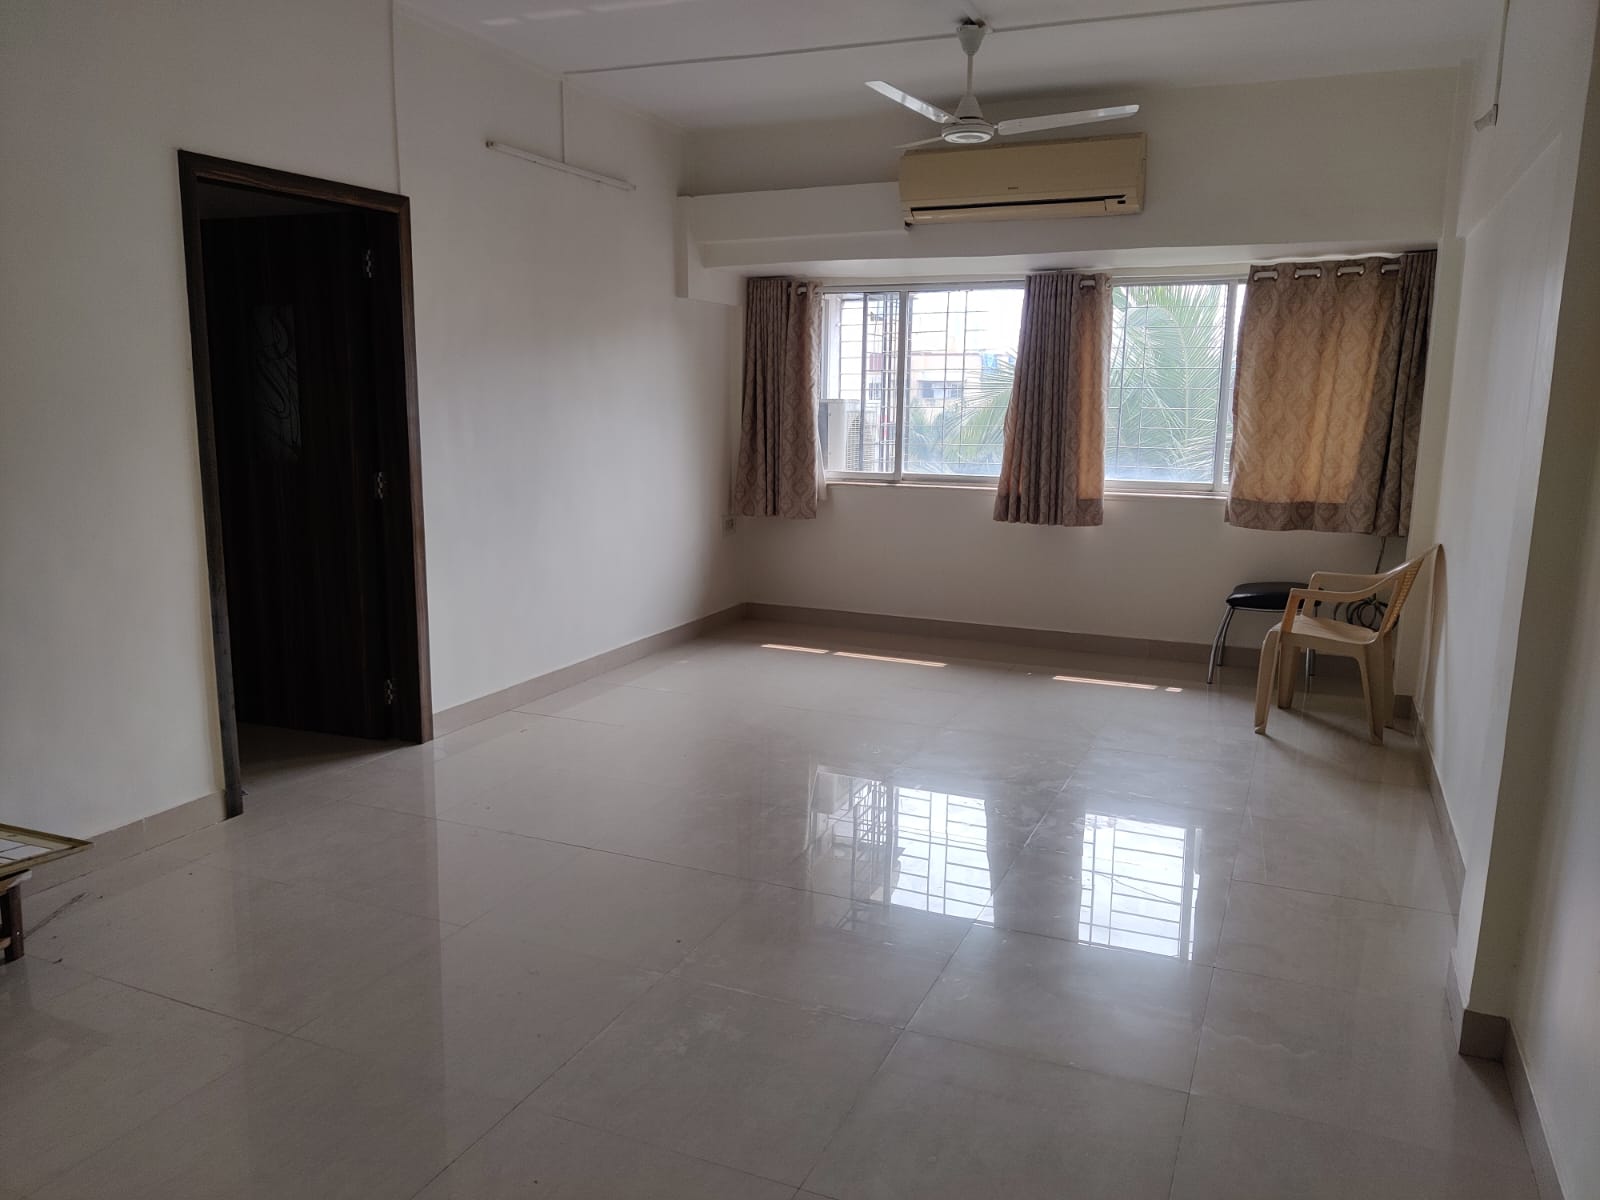 3bhk semi furnished flat for rent in gulmohar road, juhu